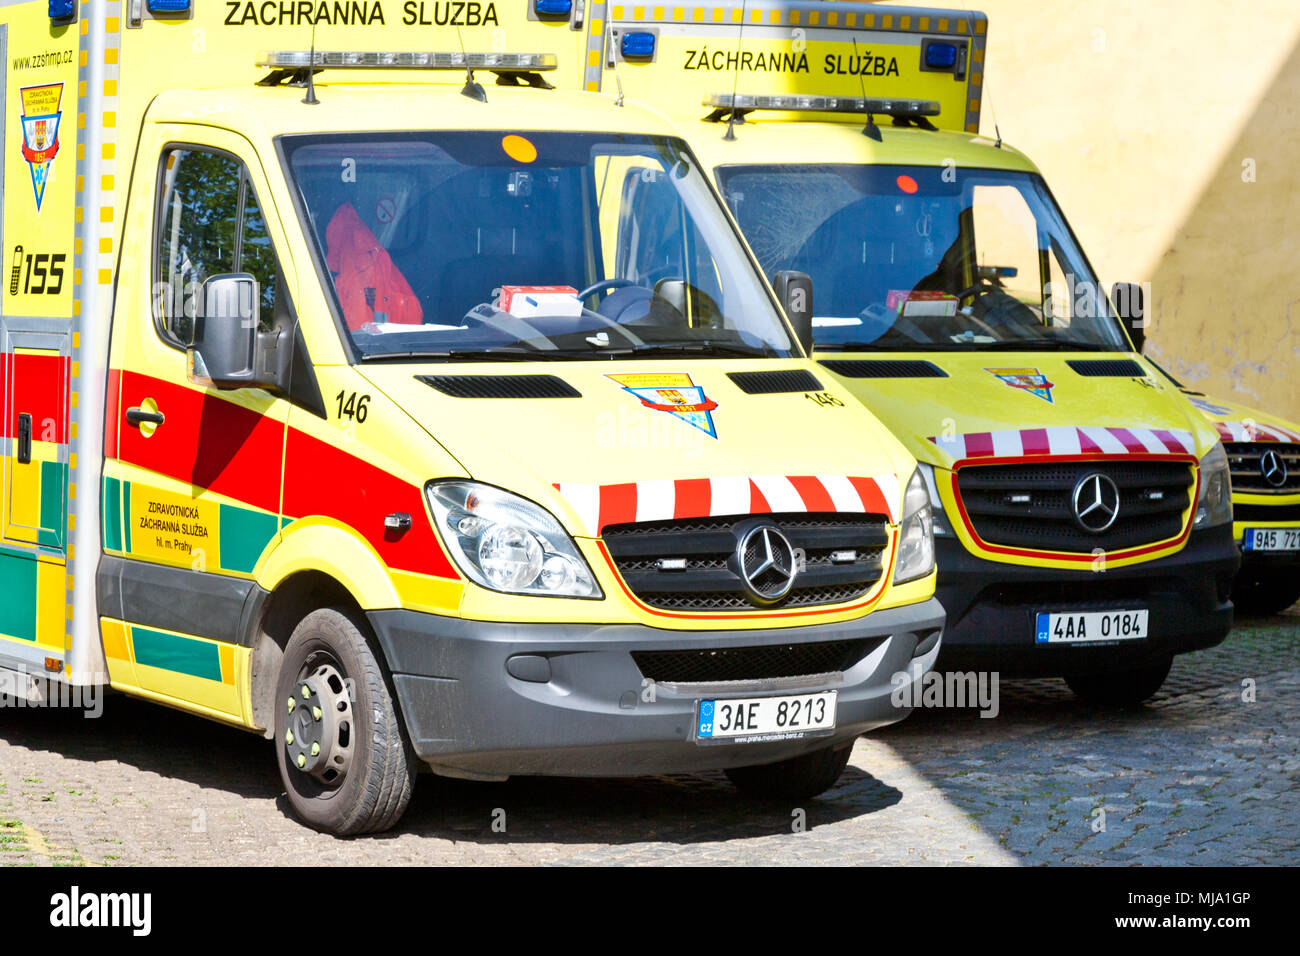 Ceska sanitka - Czech ambulance car - Zachranna sluzba Stock Photo - Alamy